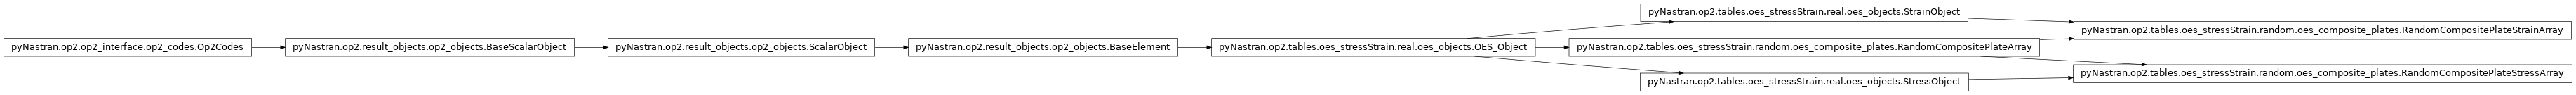 Inheritance diagram of pyNastran.op2.tables.oes_stressStrain.random.oes_composite_plates